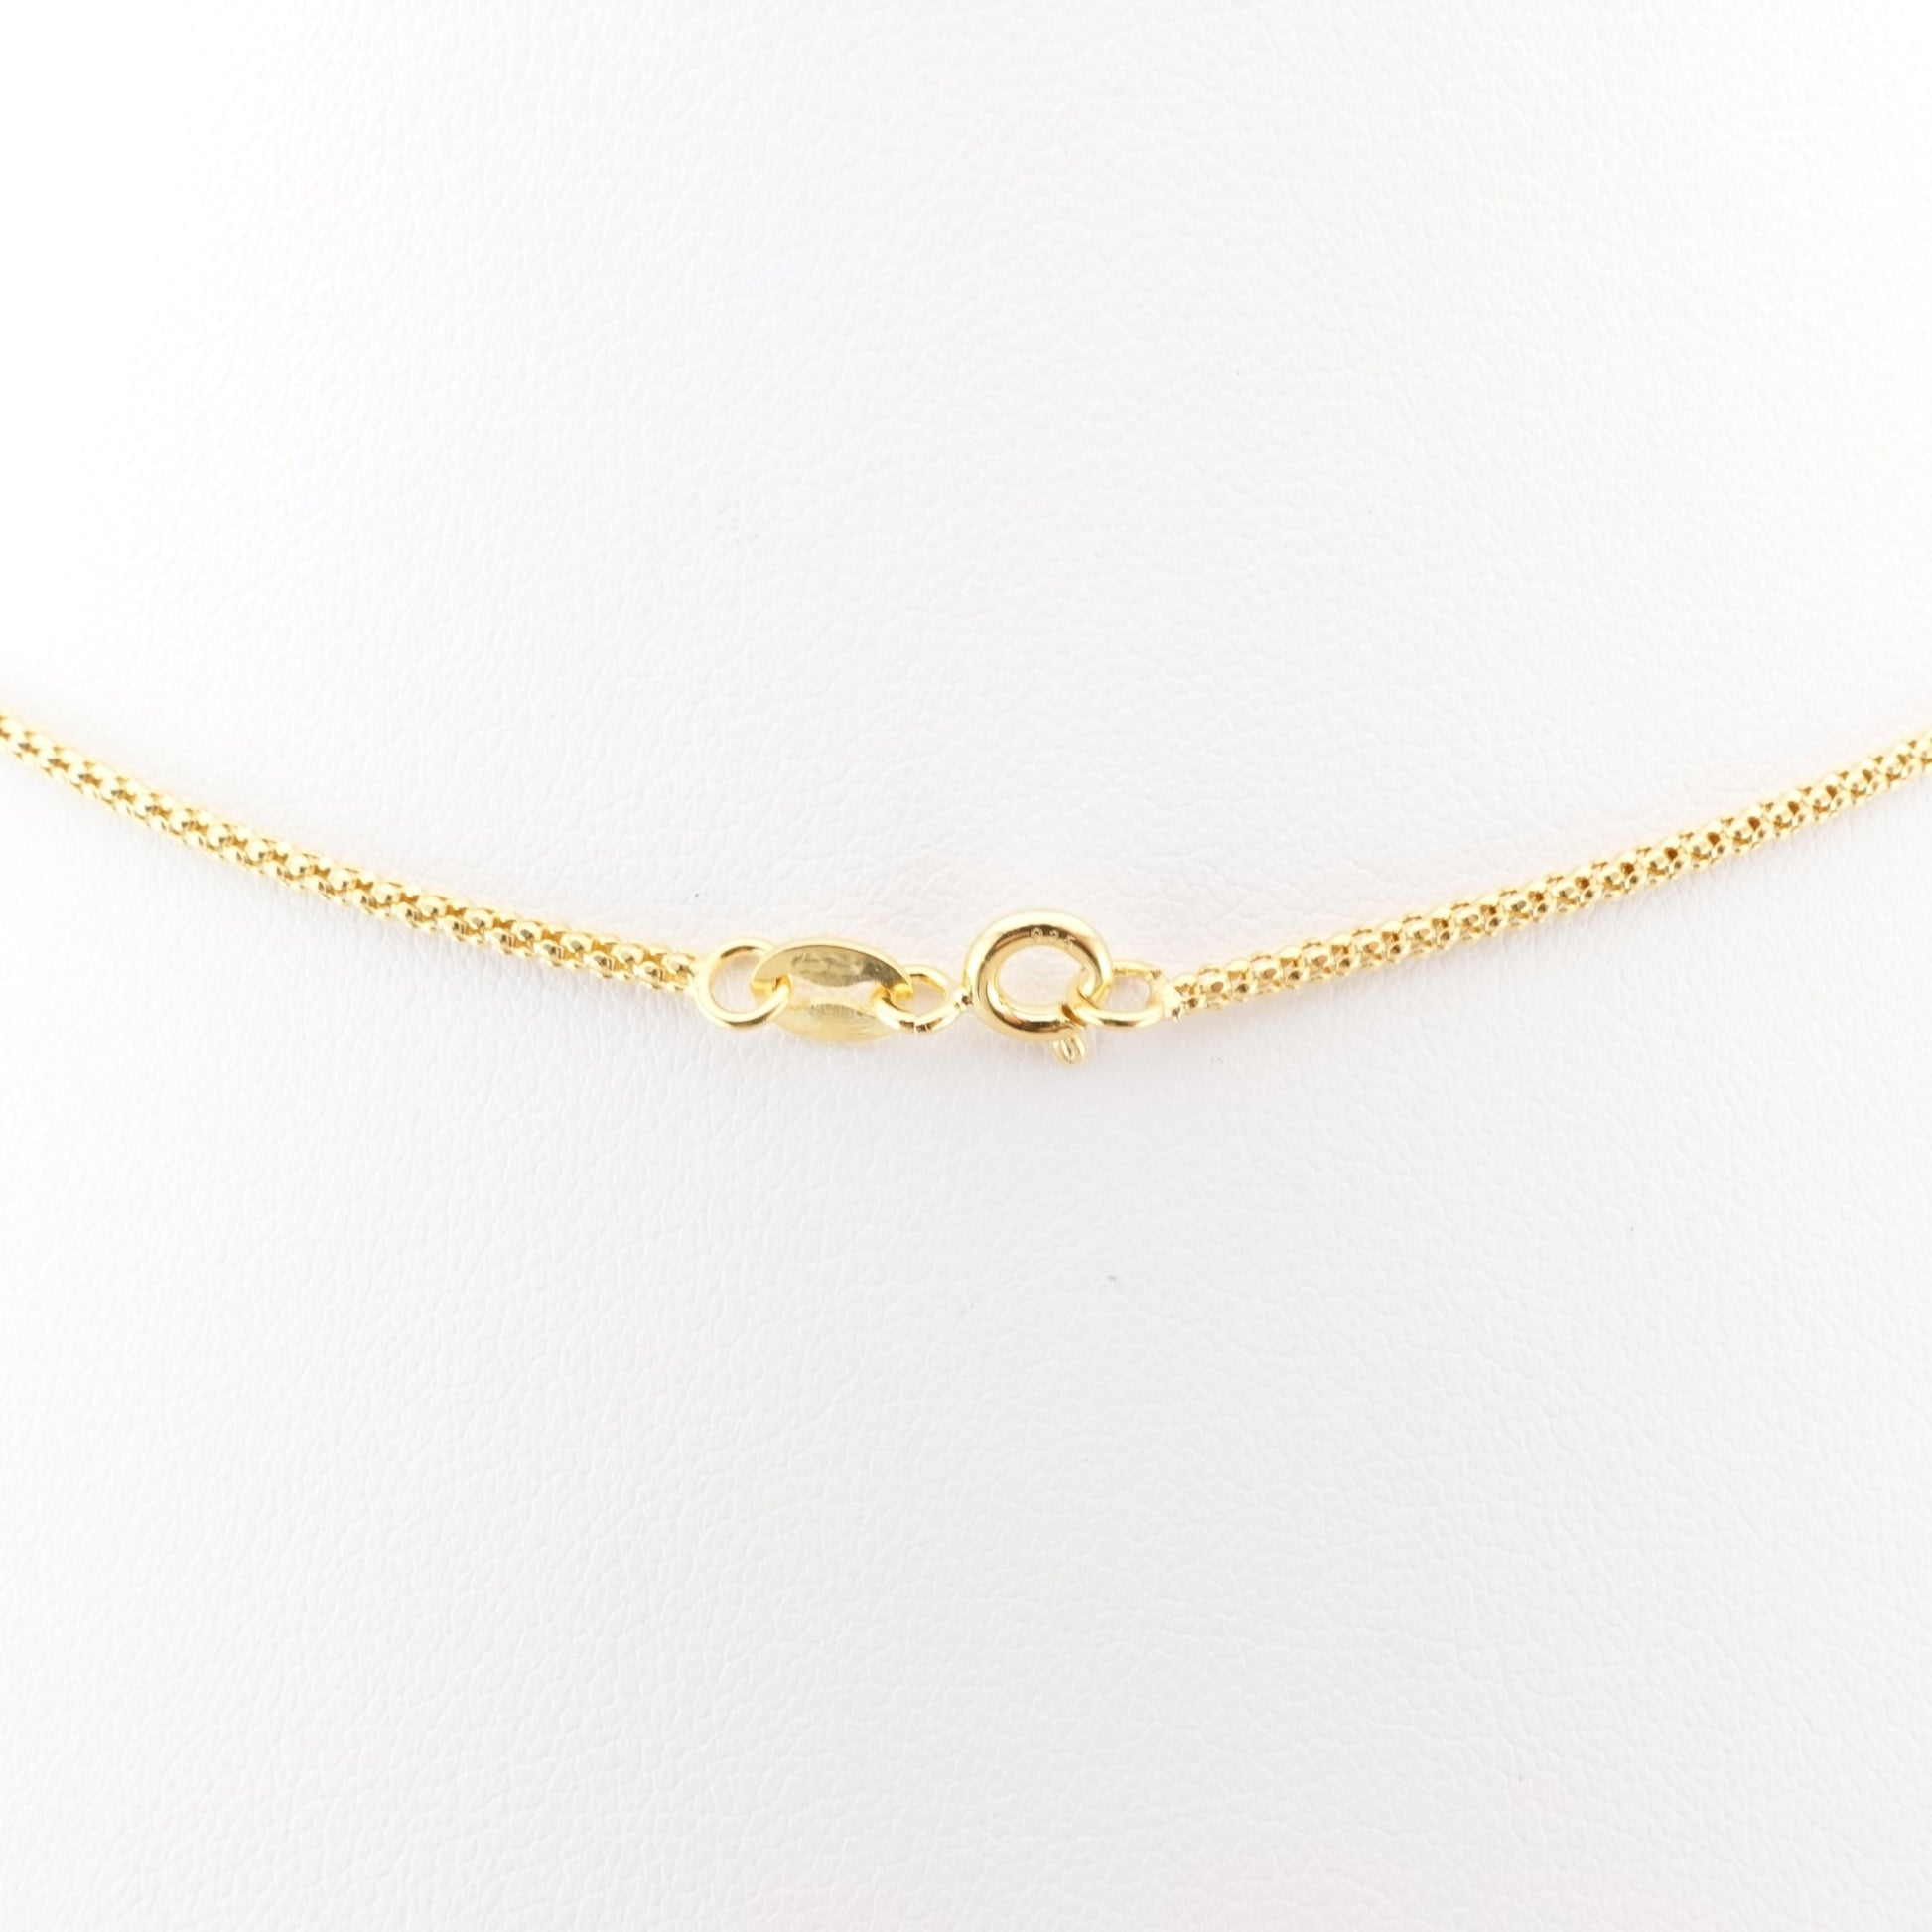 CHANEL Gold CC Logo Charm on Necklace - Bag Envy